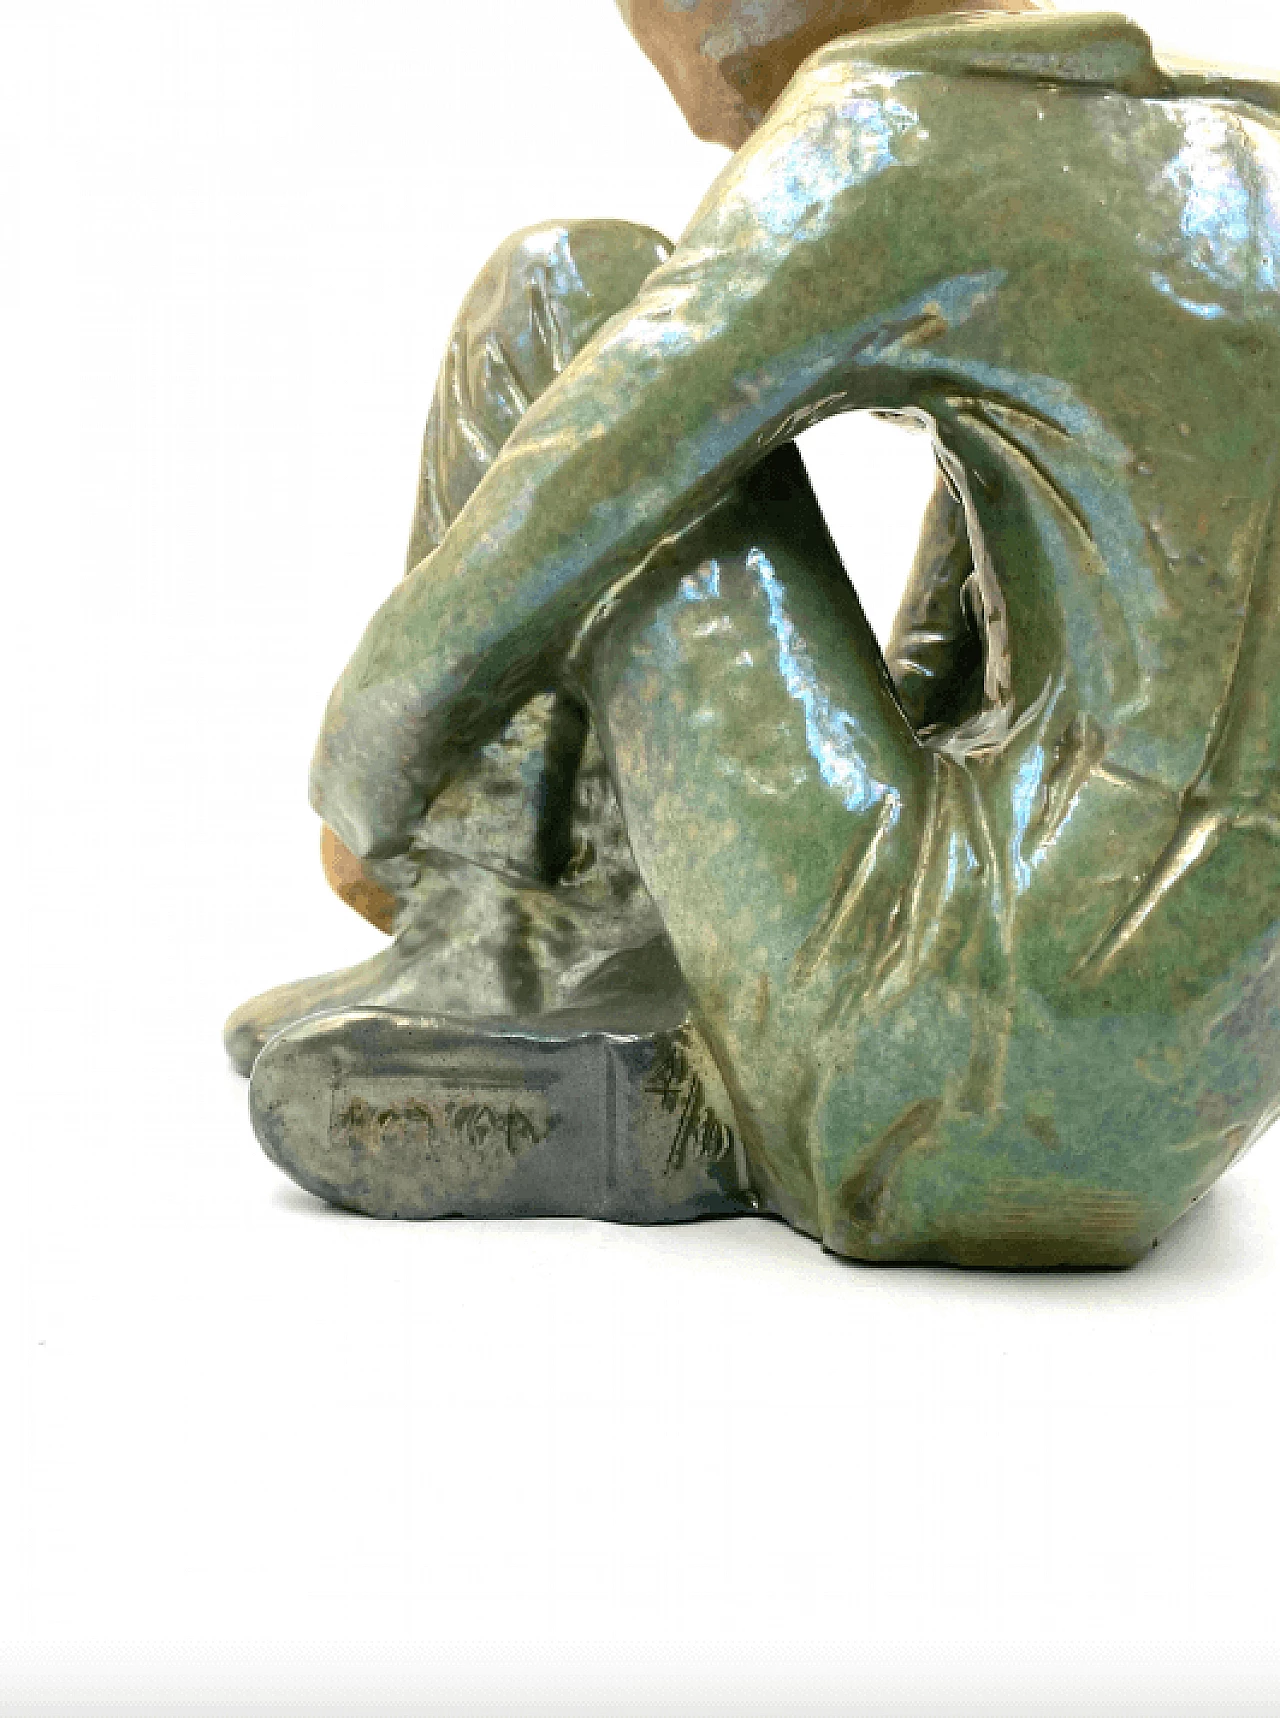 Giordano Tronconi, Seated boy, green ceramic figure from Faenza, 1950s 66